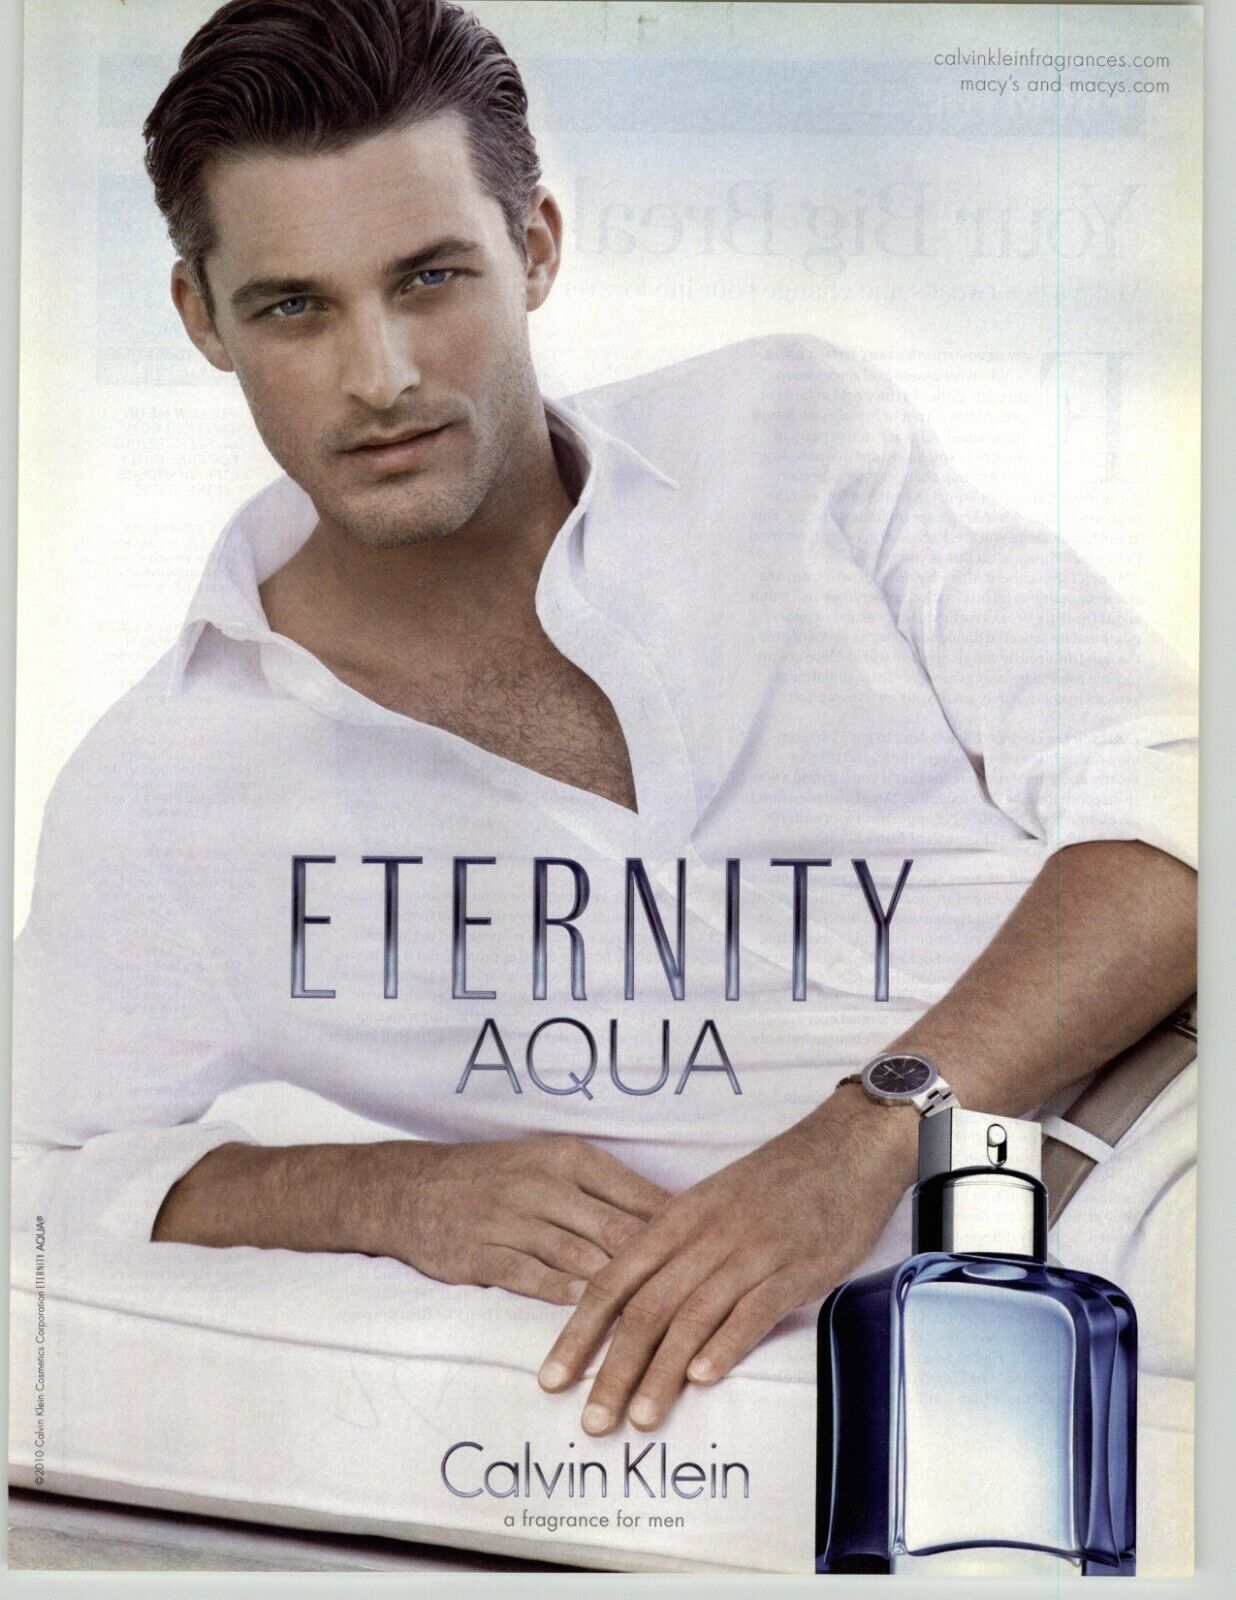 2011 Calvin Klein Eternity Aqua Mens Cologne Attractive Man Photo Vintage Ad  